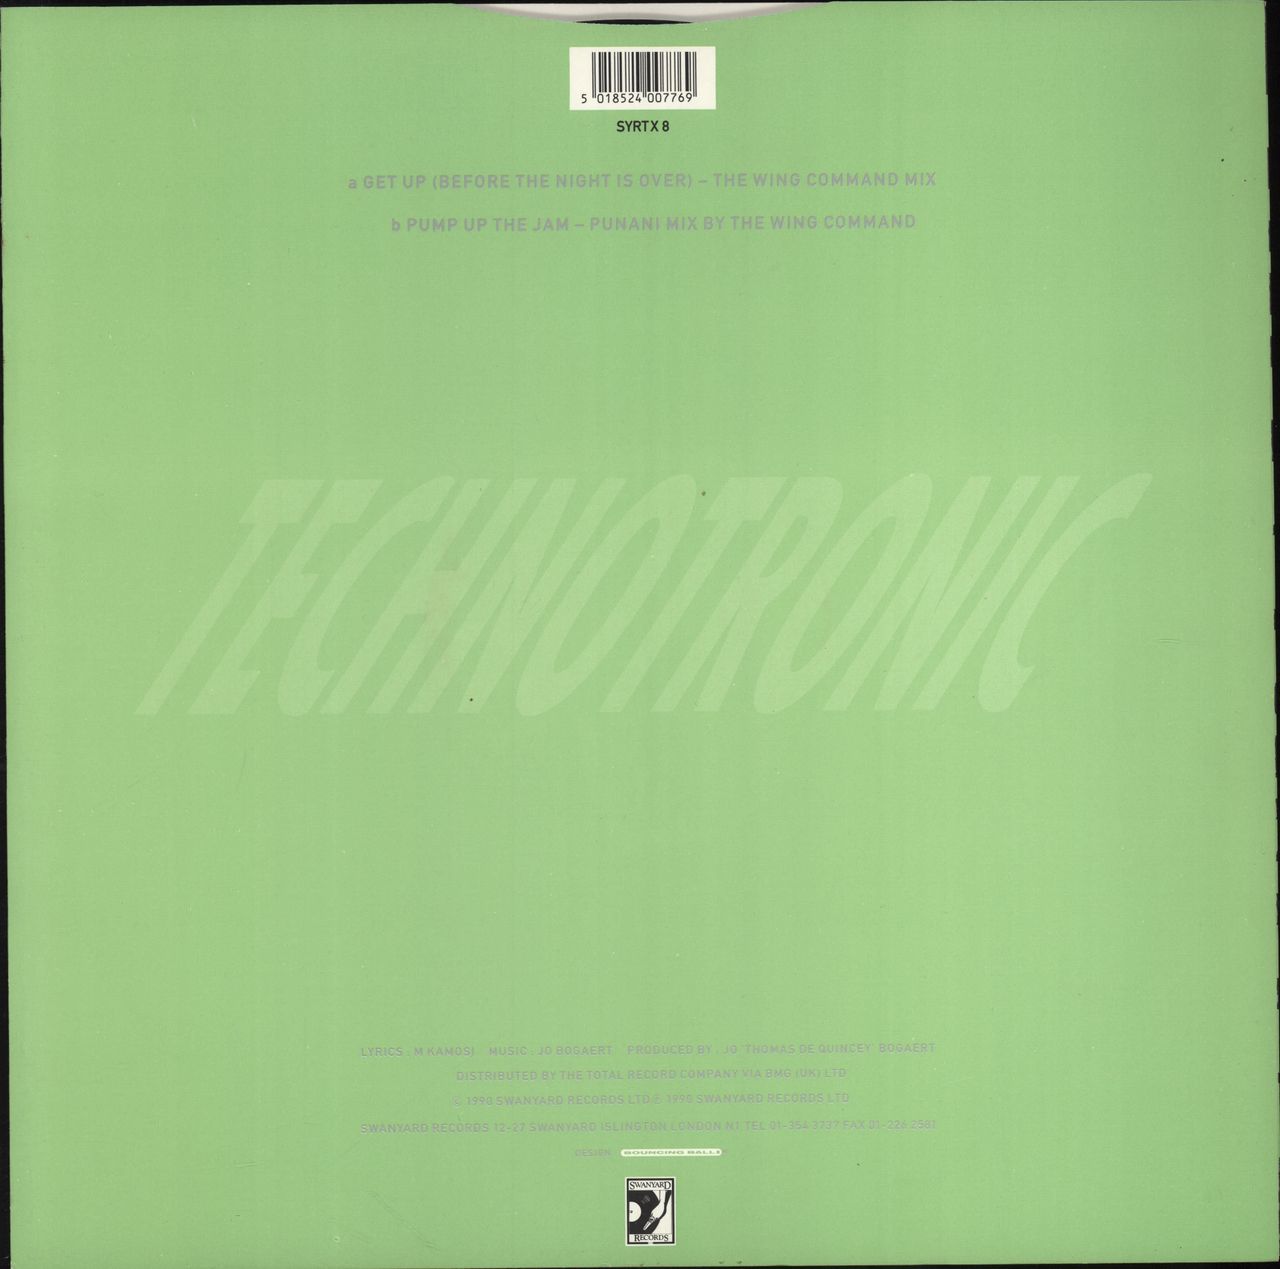 Technotronic Get Up UK 12" vinyl single (12 inch record / Maxi-single) 5018524007769